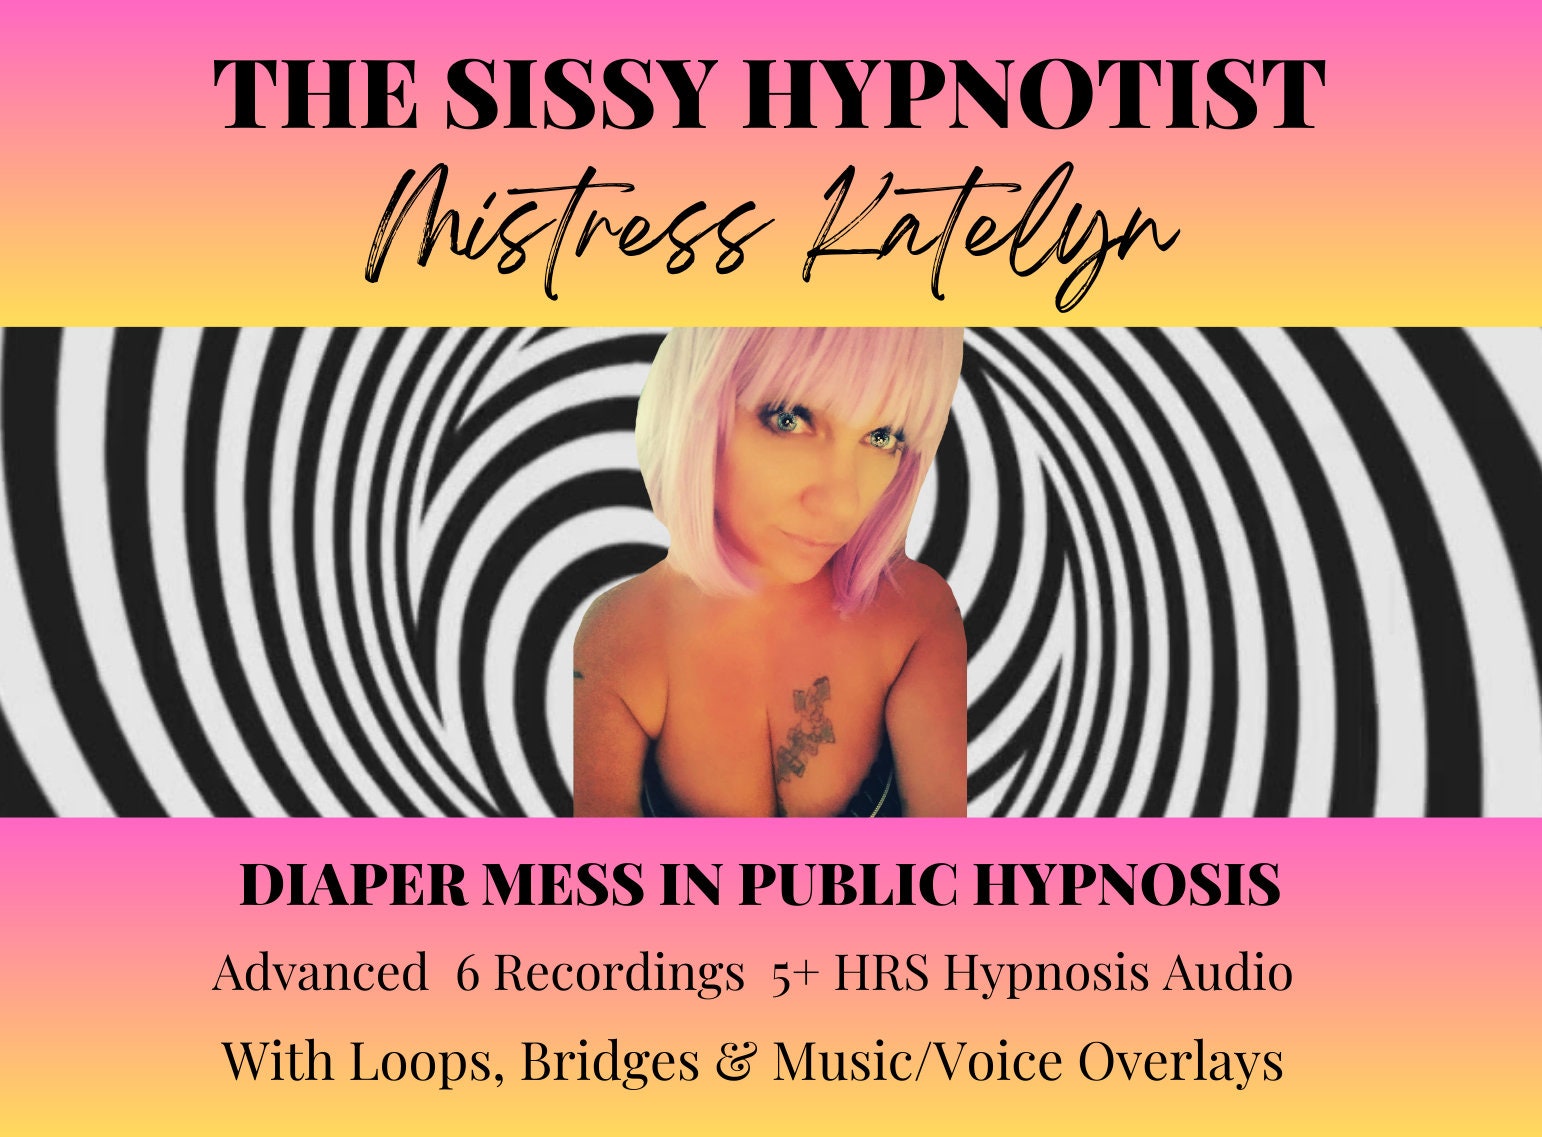 Abdl hypnosis free